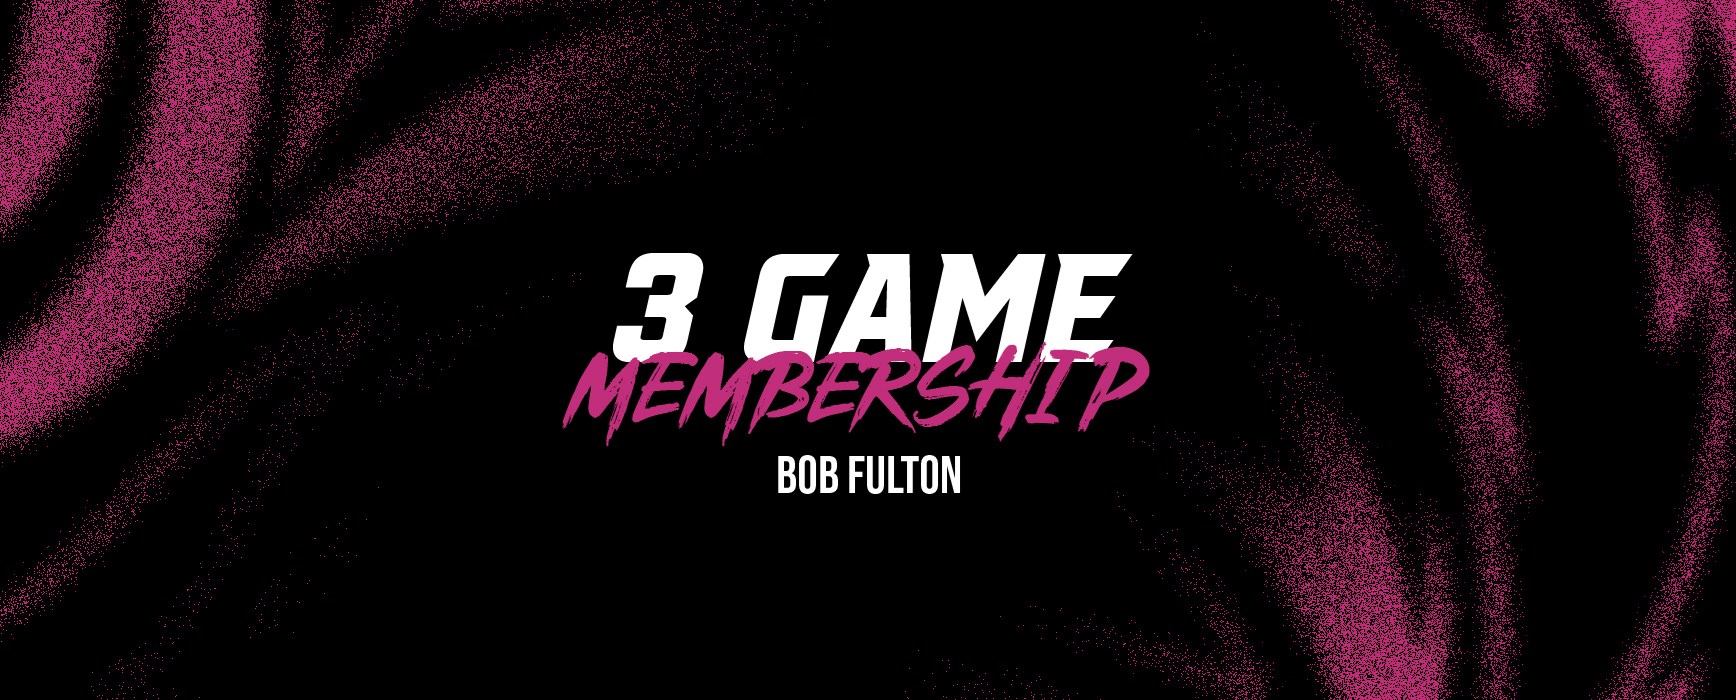 3 Game Bob Fulton